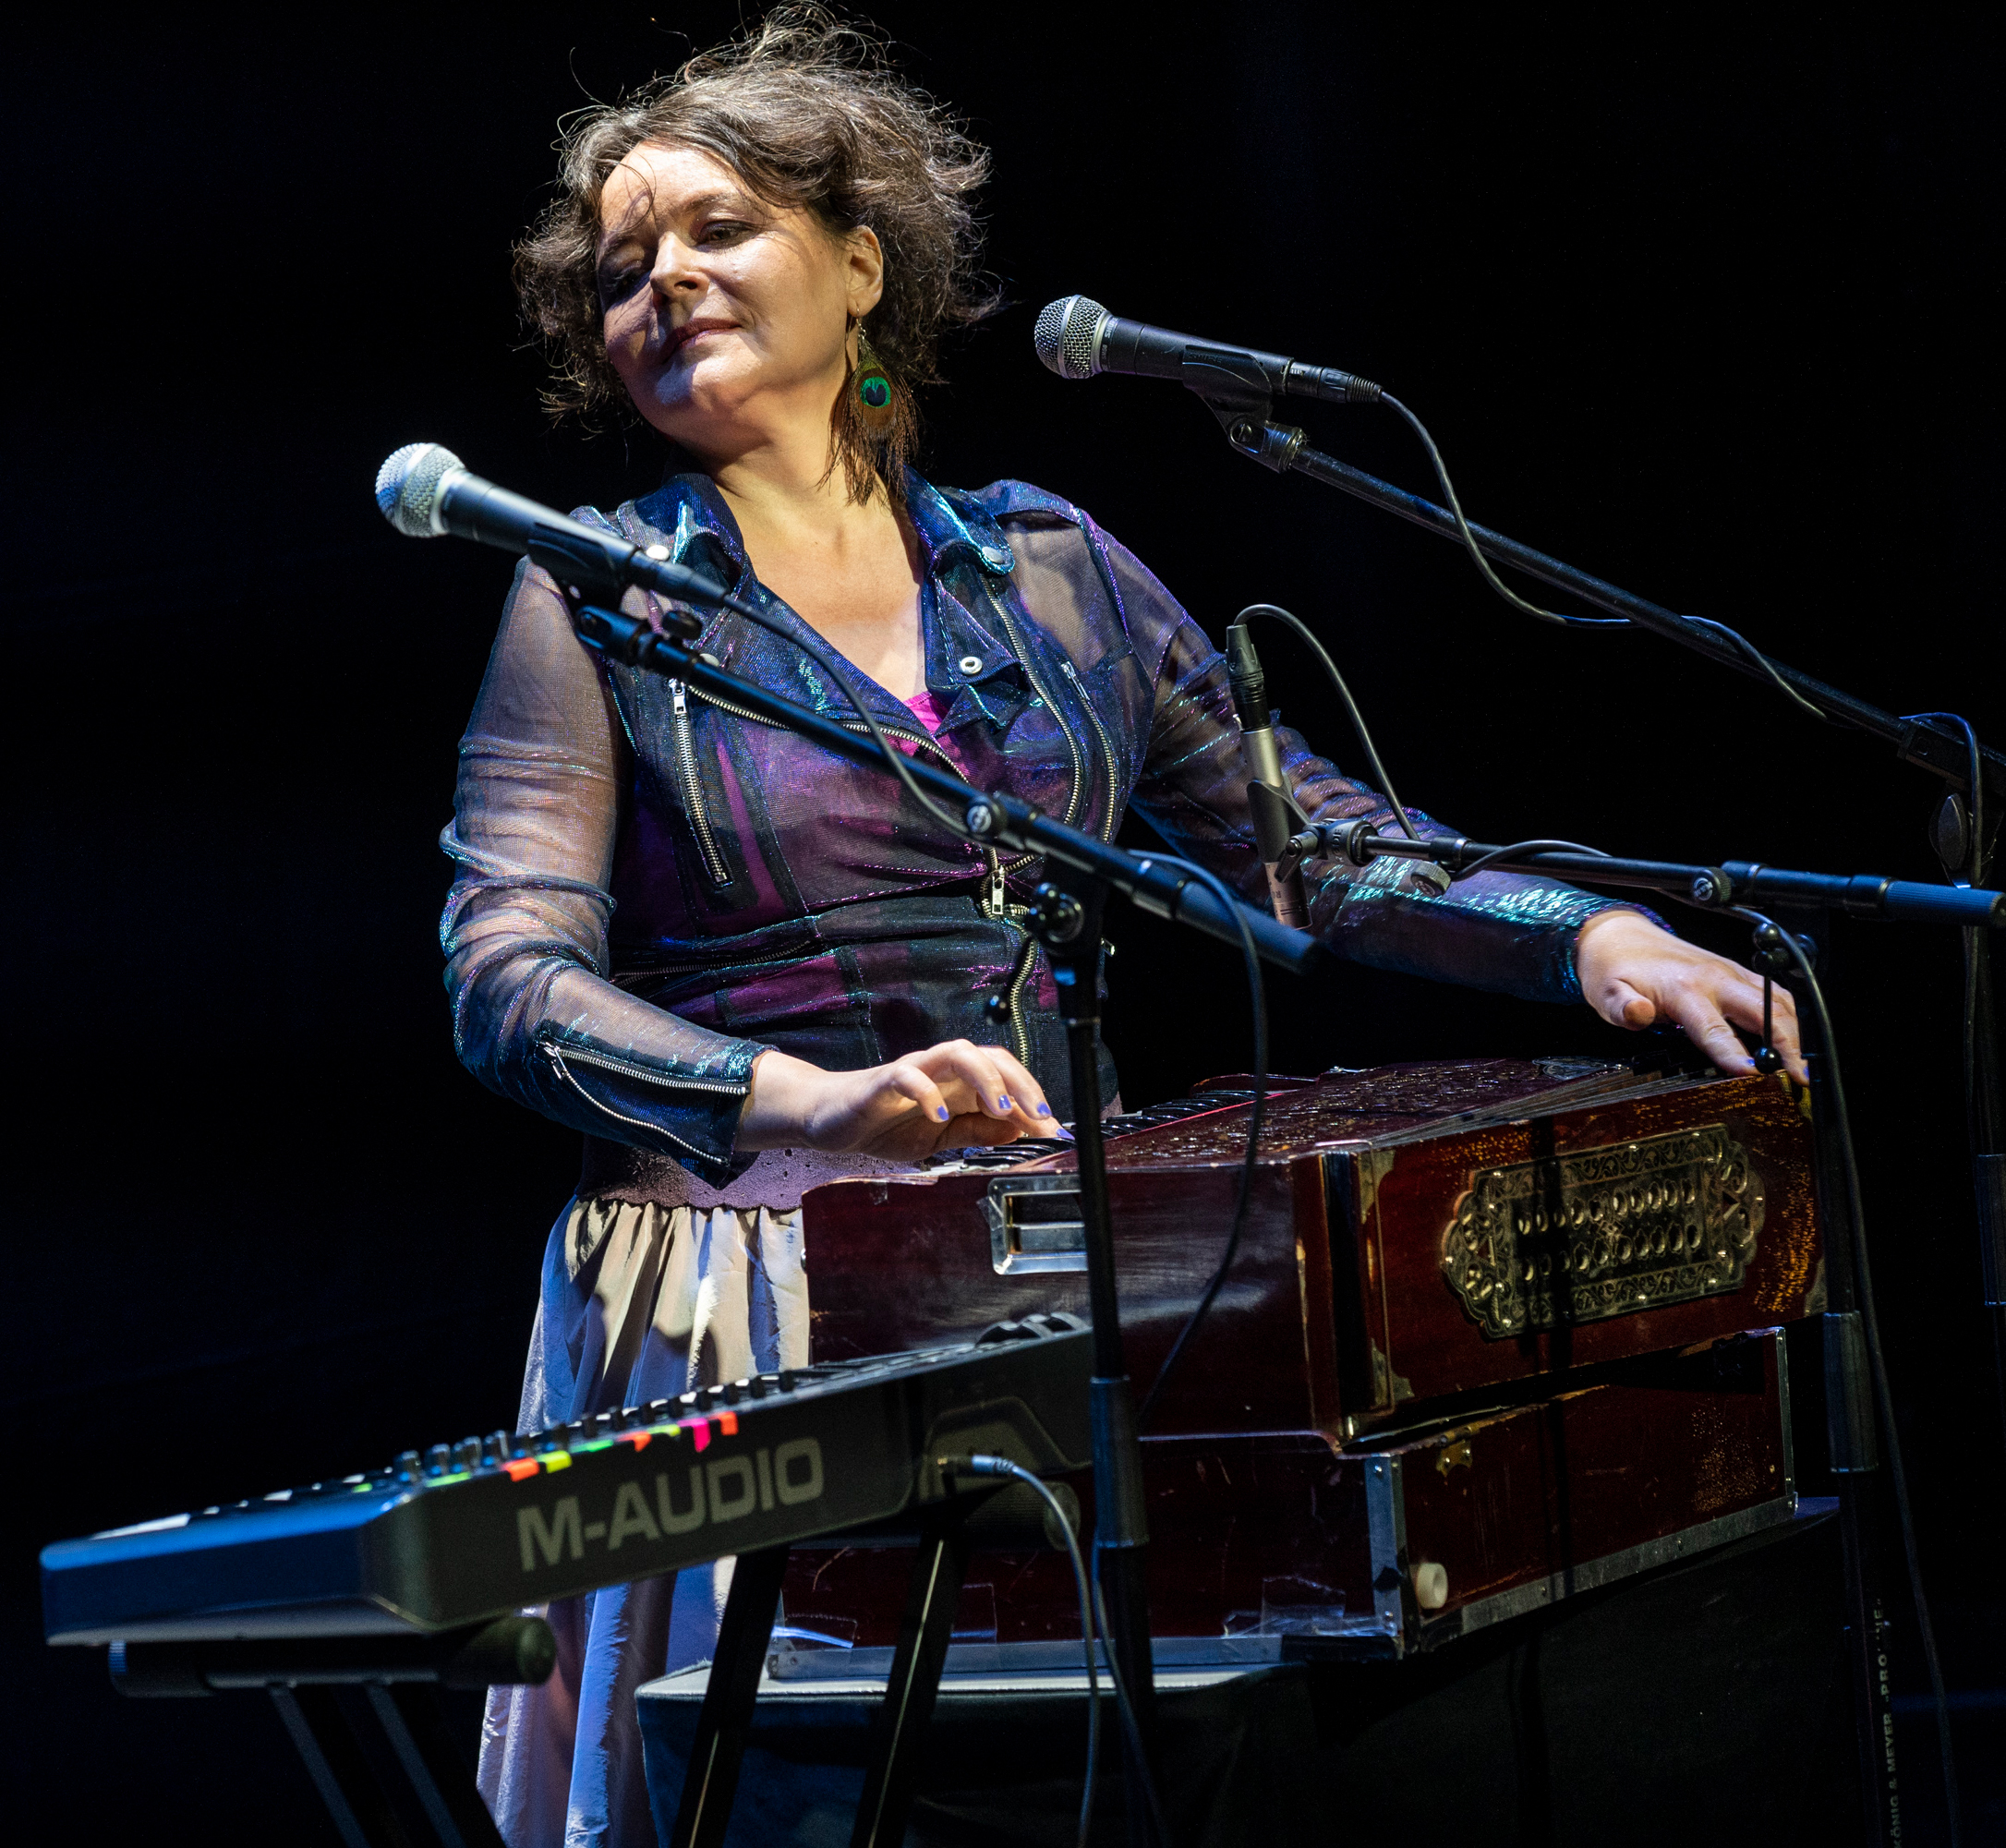 Mariana Sadovska with a keyboard and microphones. 